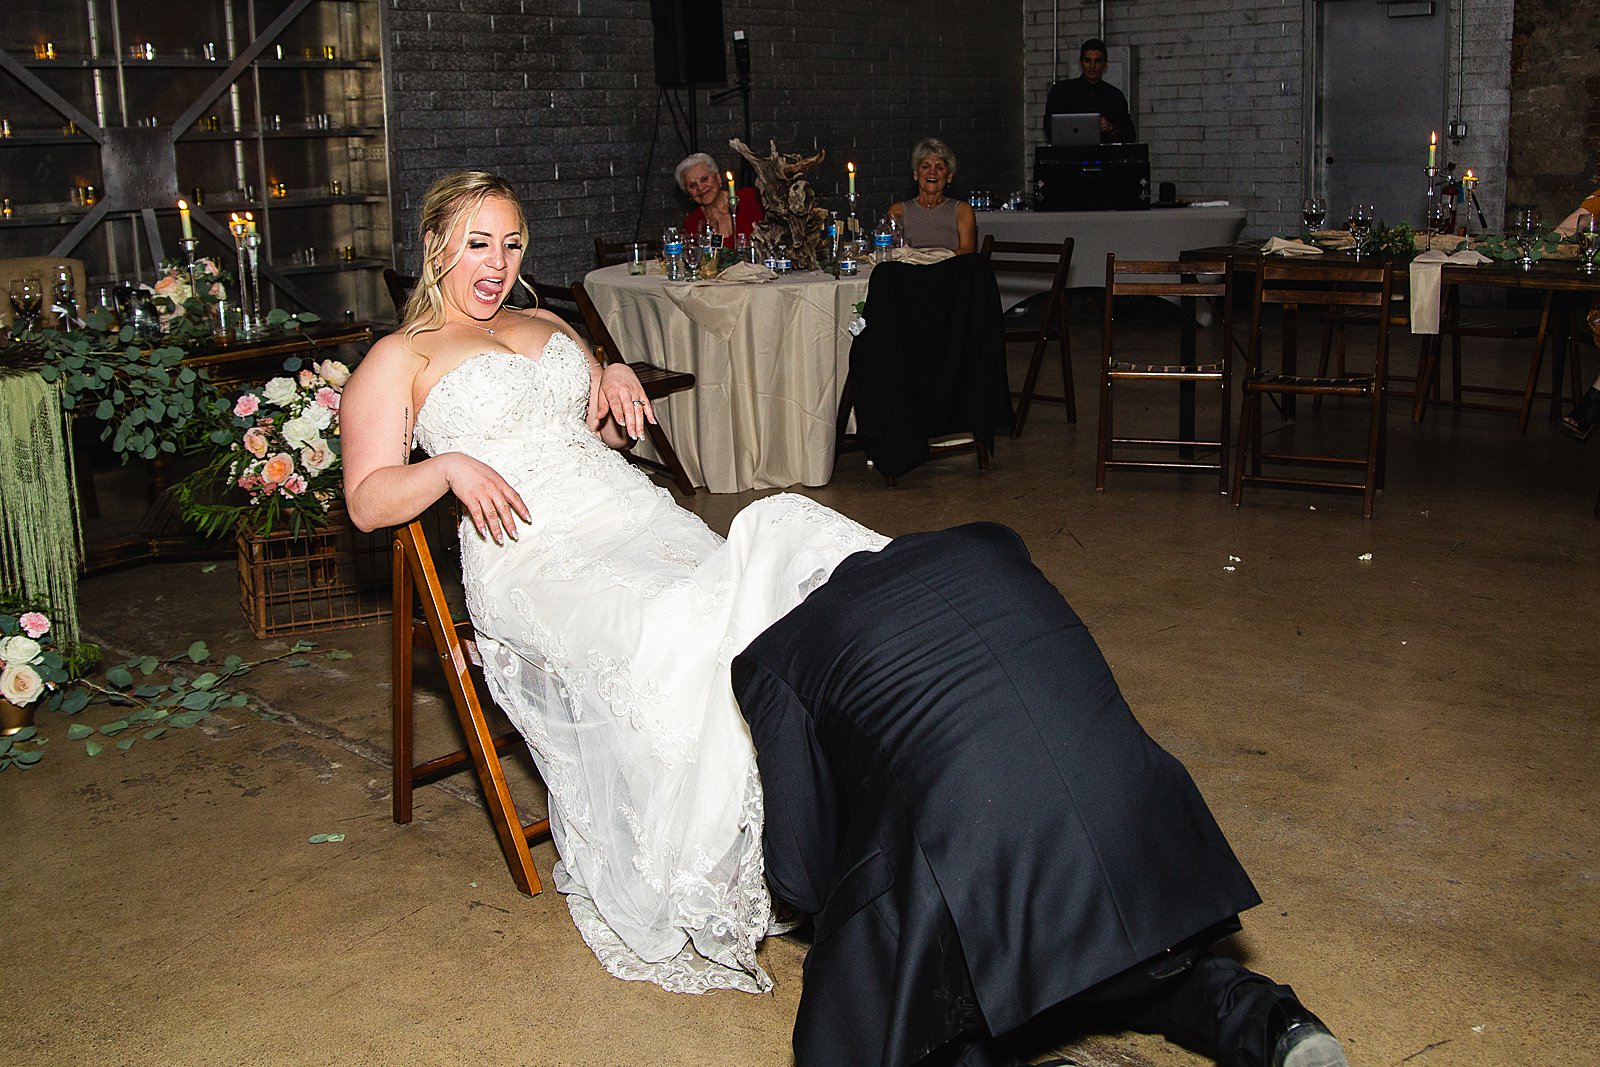 Garter toss at The Ice House wedding reception by Phoenix wedding photographer PMA Photography.